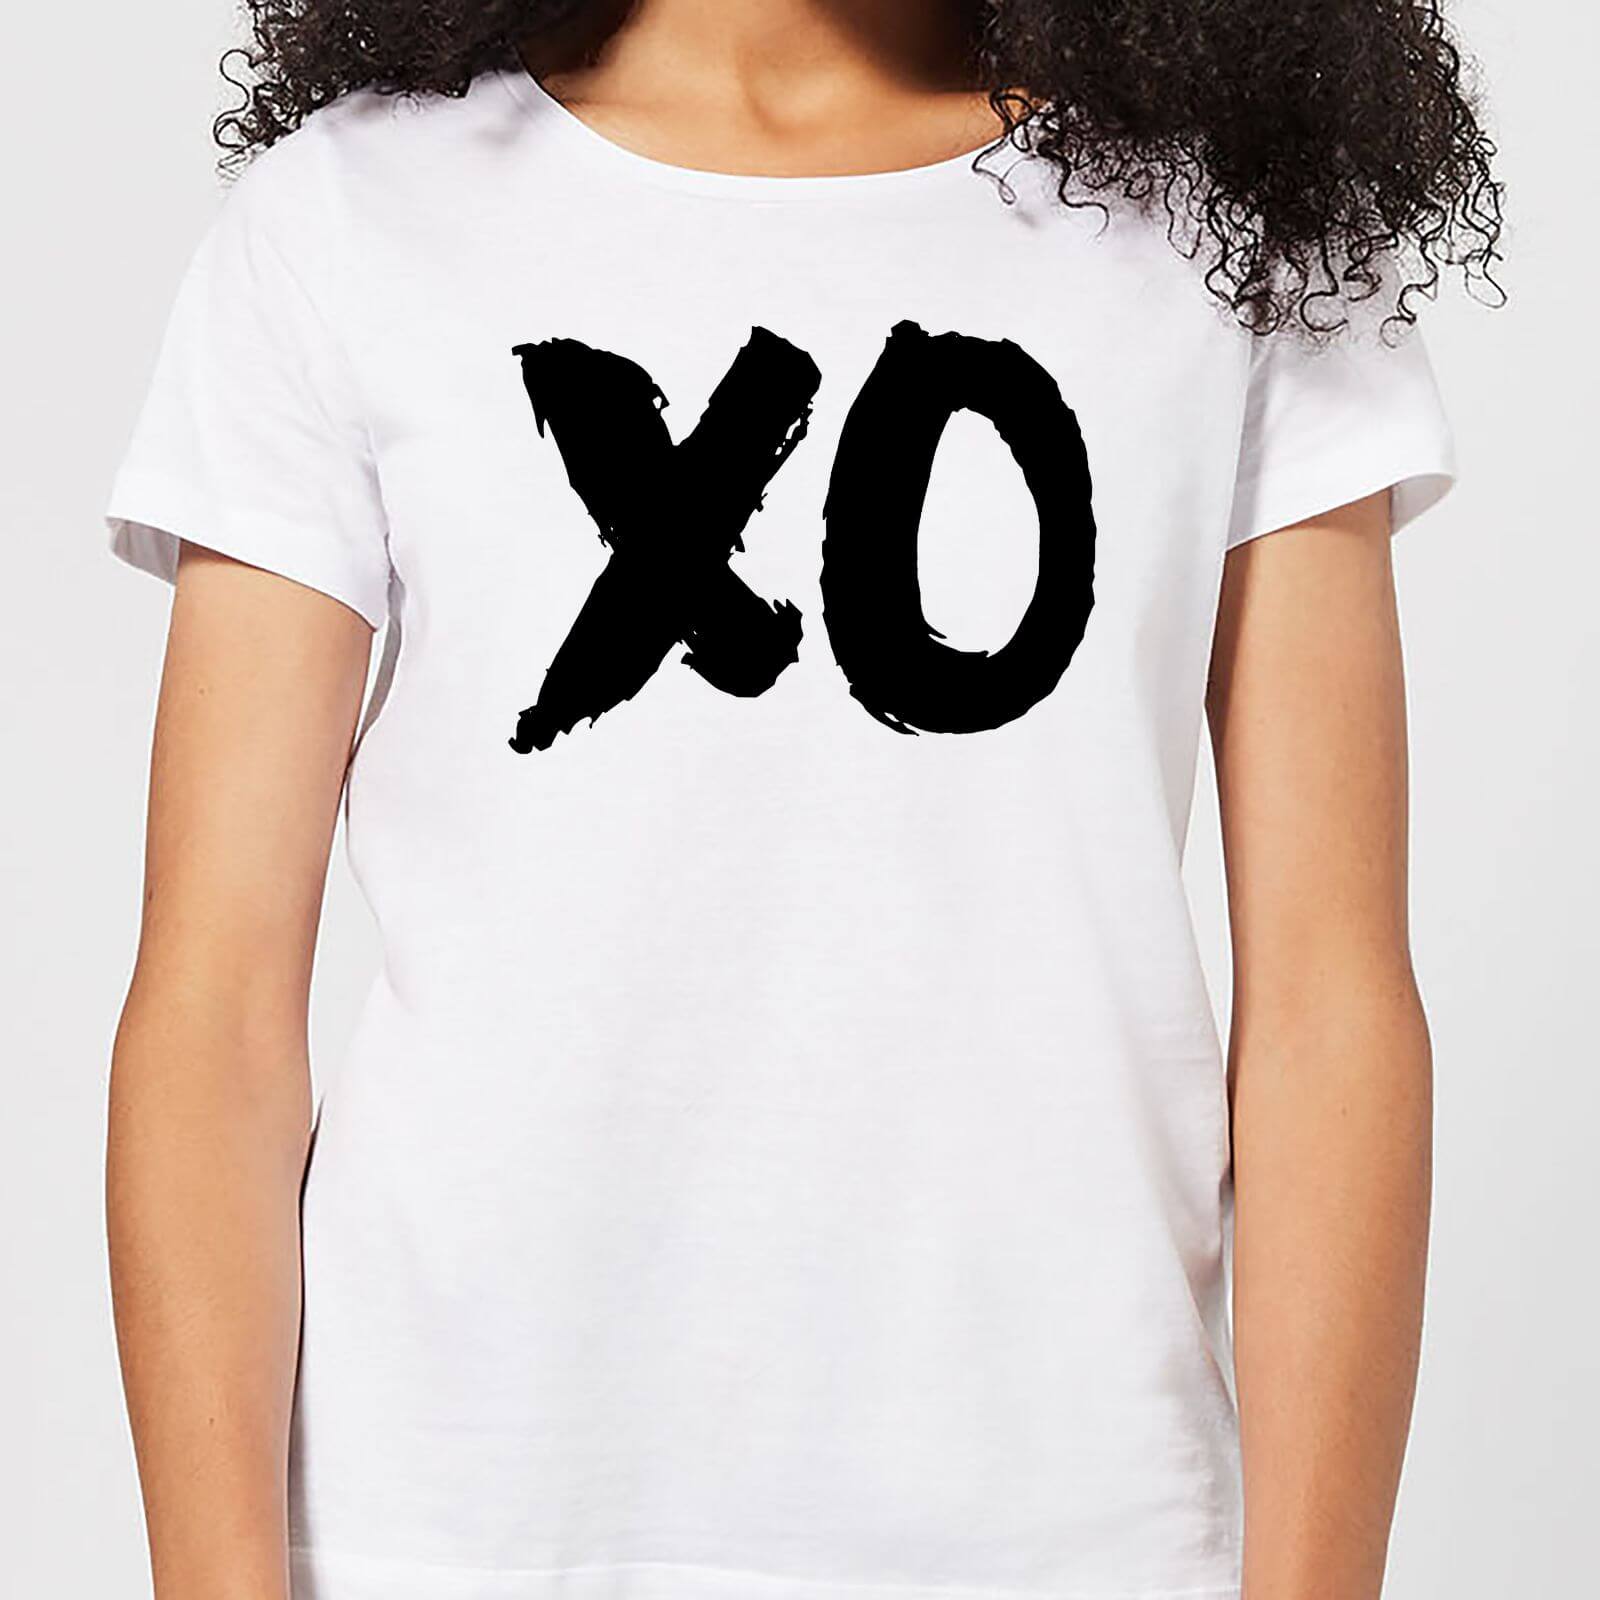 The Motivated Type XO Women's T-Shirt - White - S - White